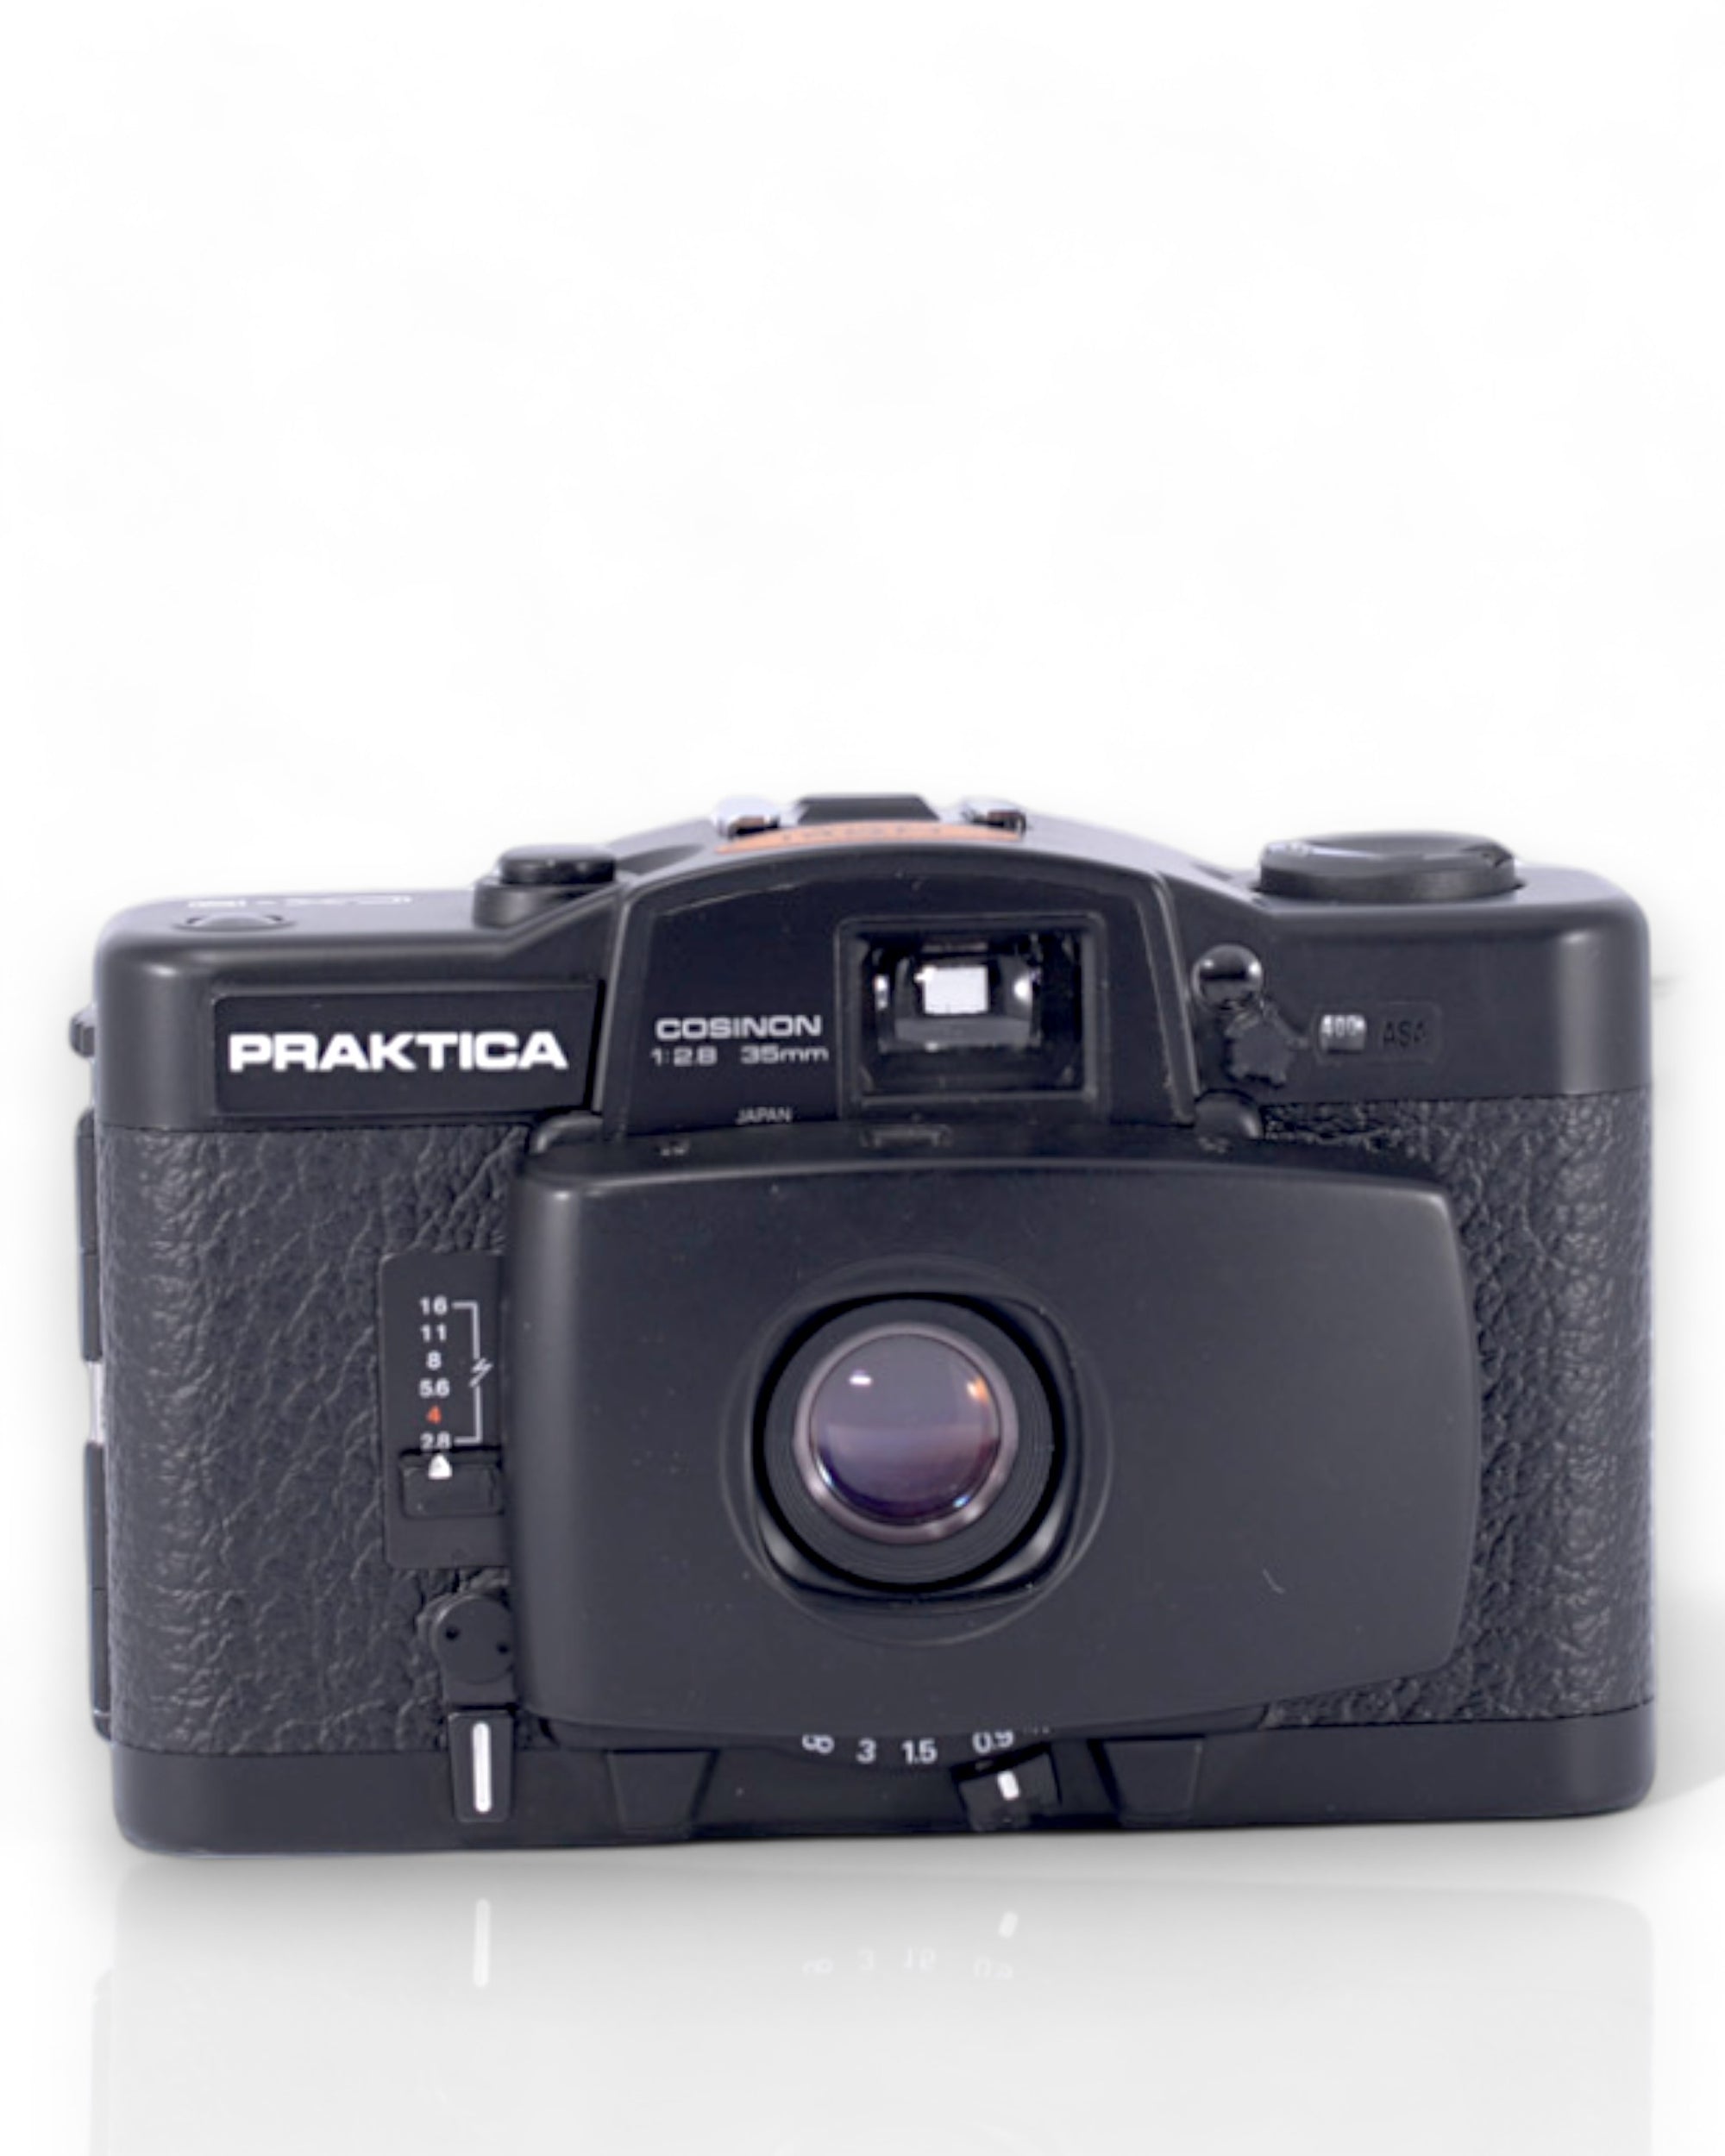 BOXED KIT Praktica CX-2 35mm film camera with 35mm f2.8 lens